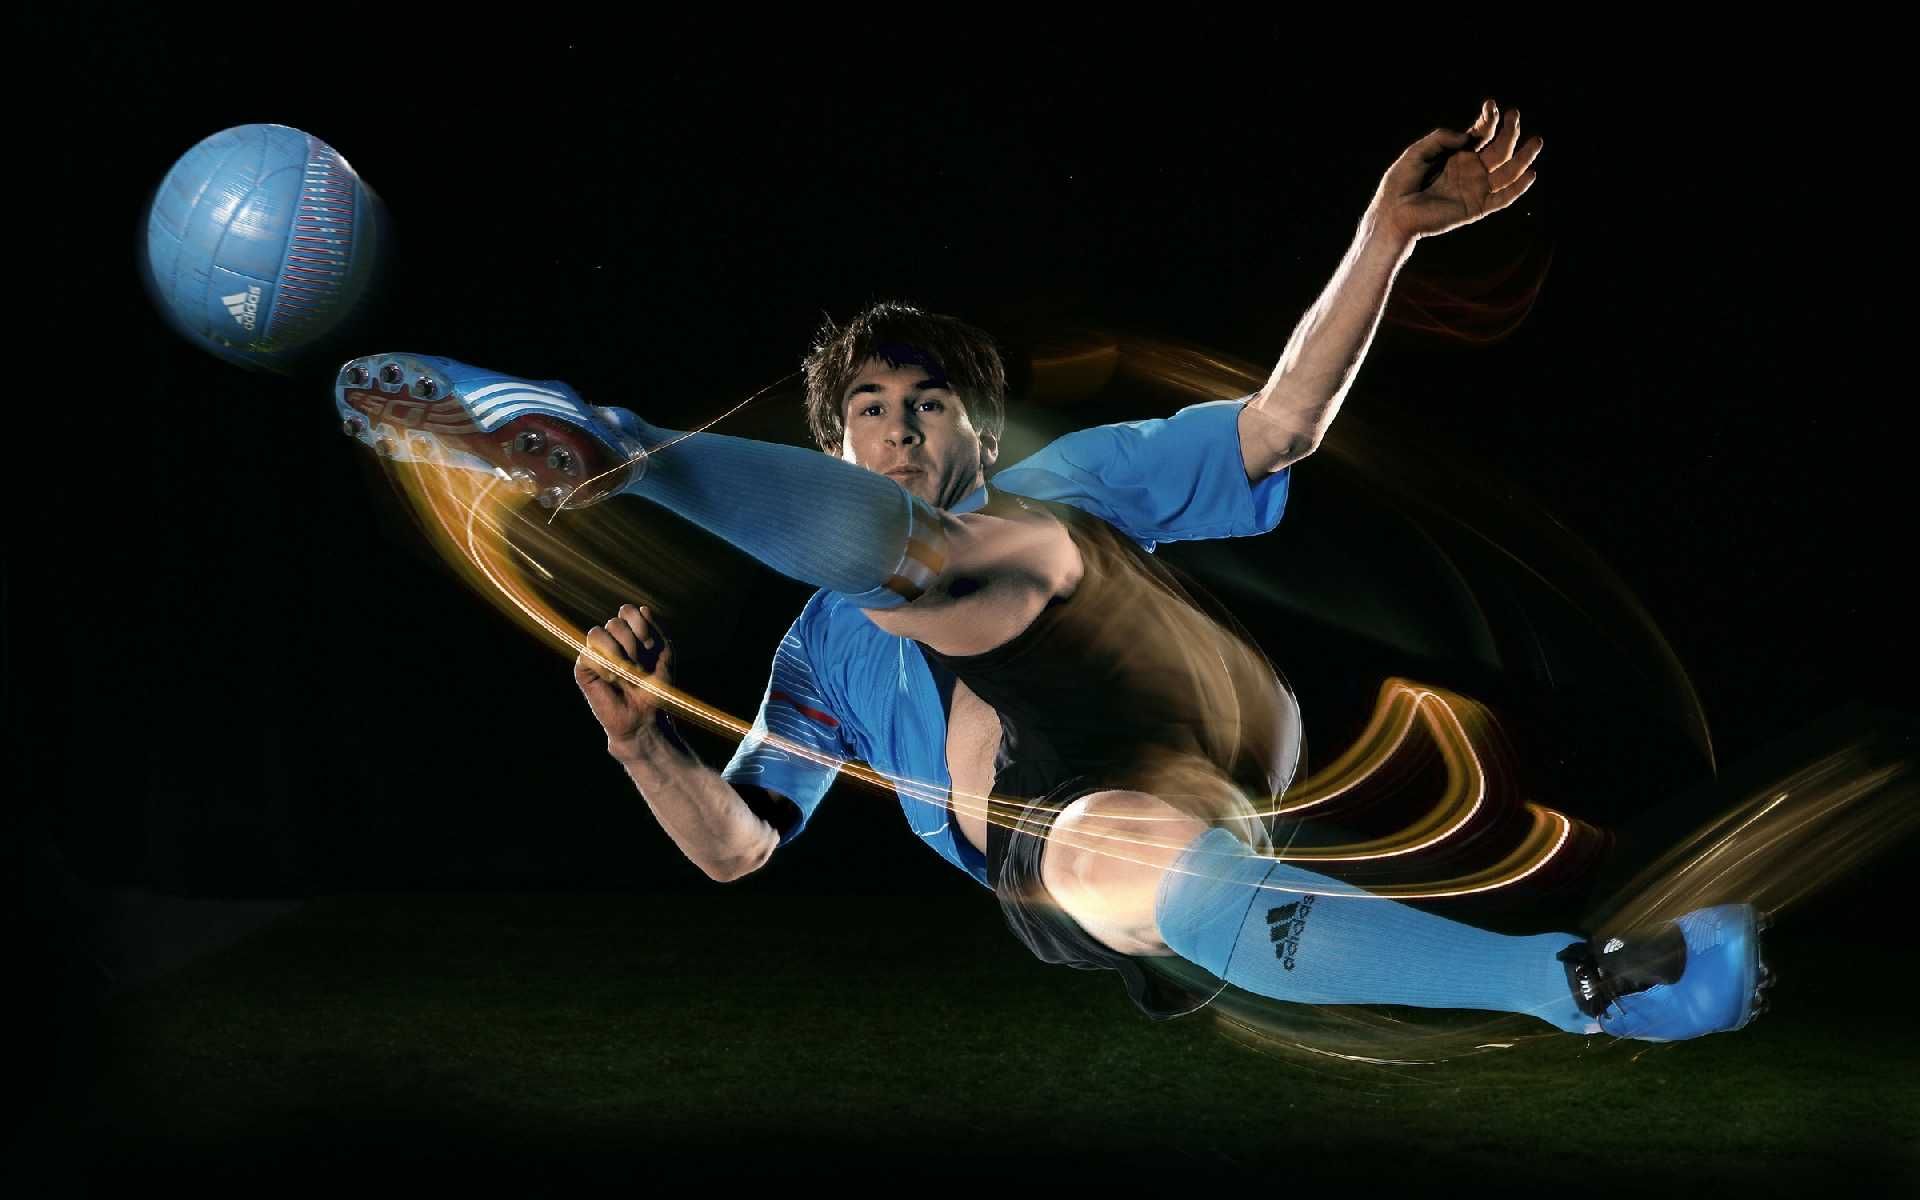 Messi Adidas Gear Flying Kick Wallpaper 1920x Jpg